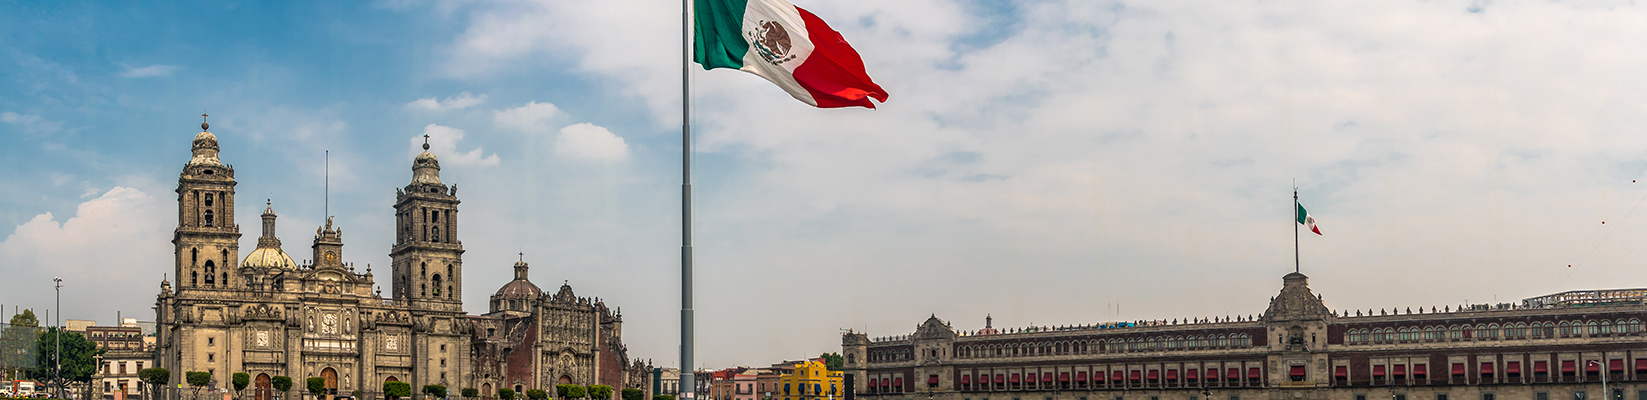 Free Tours Mexico City